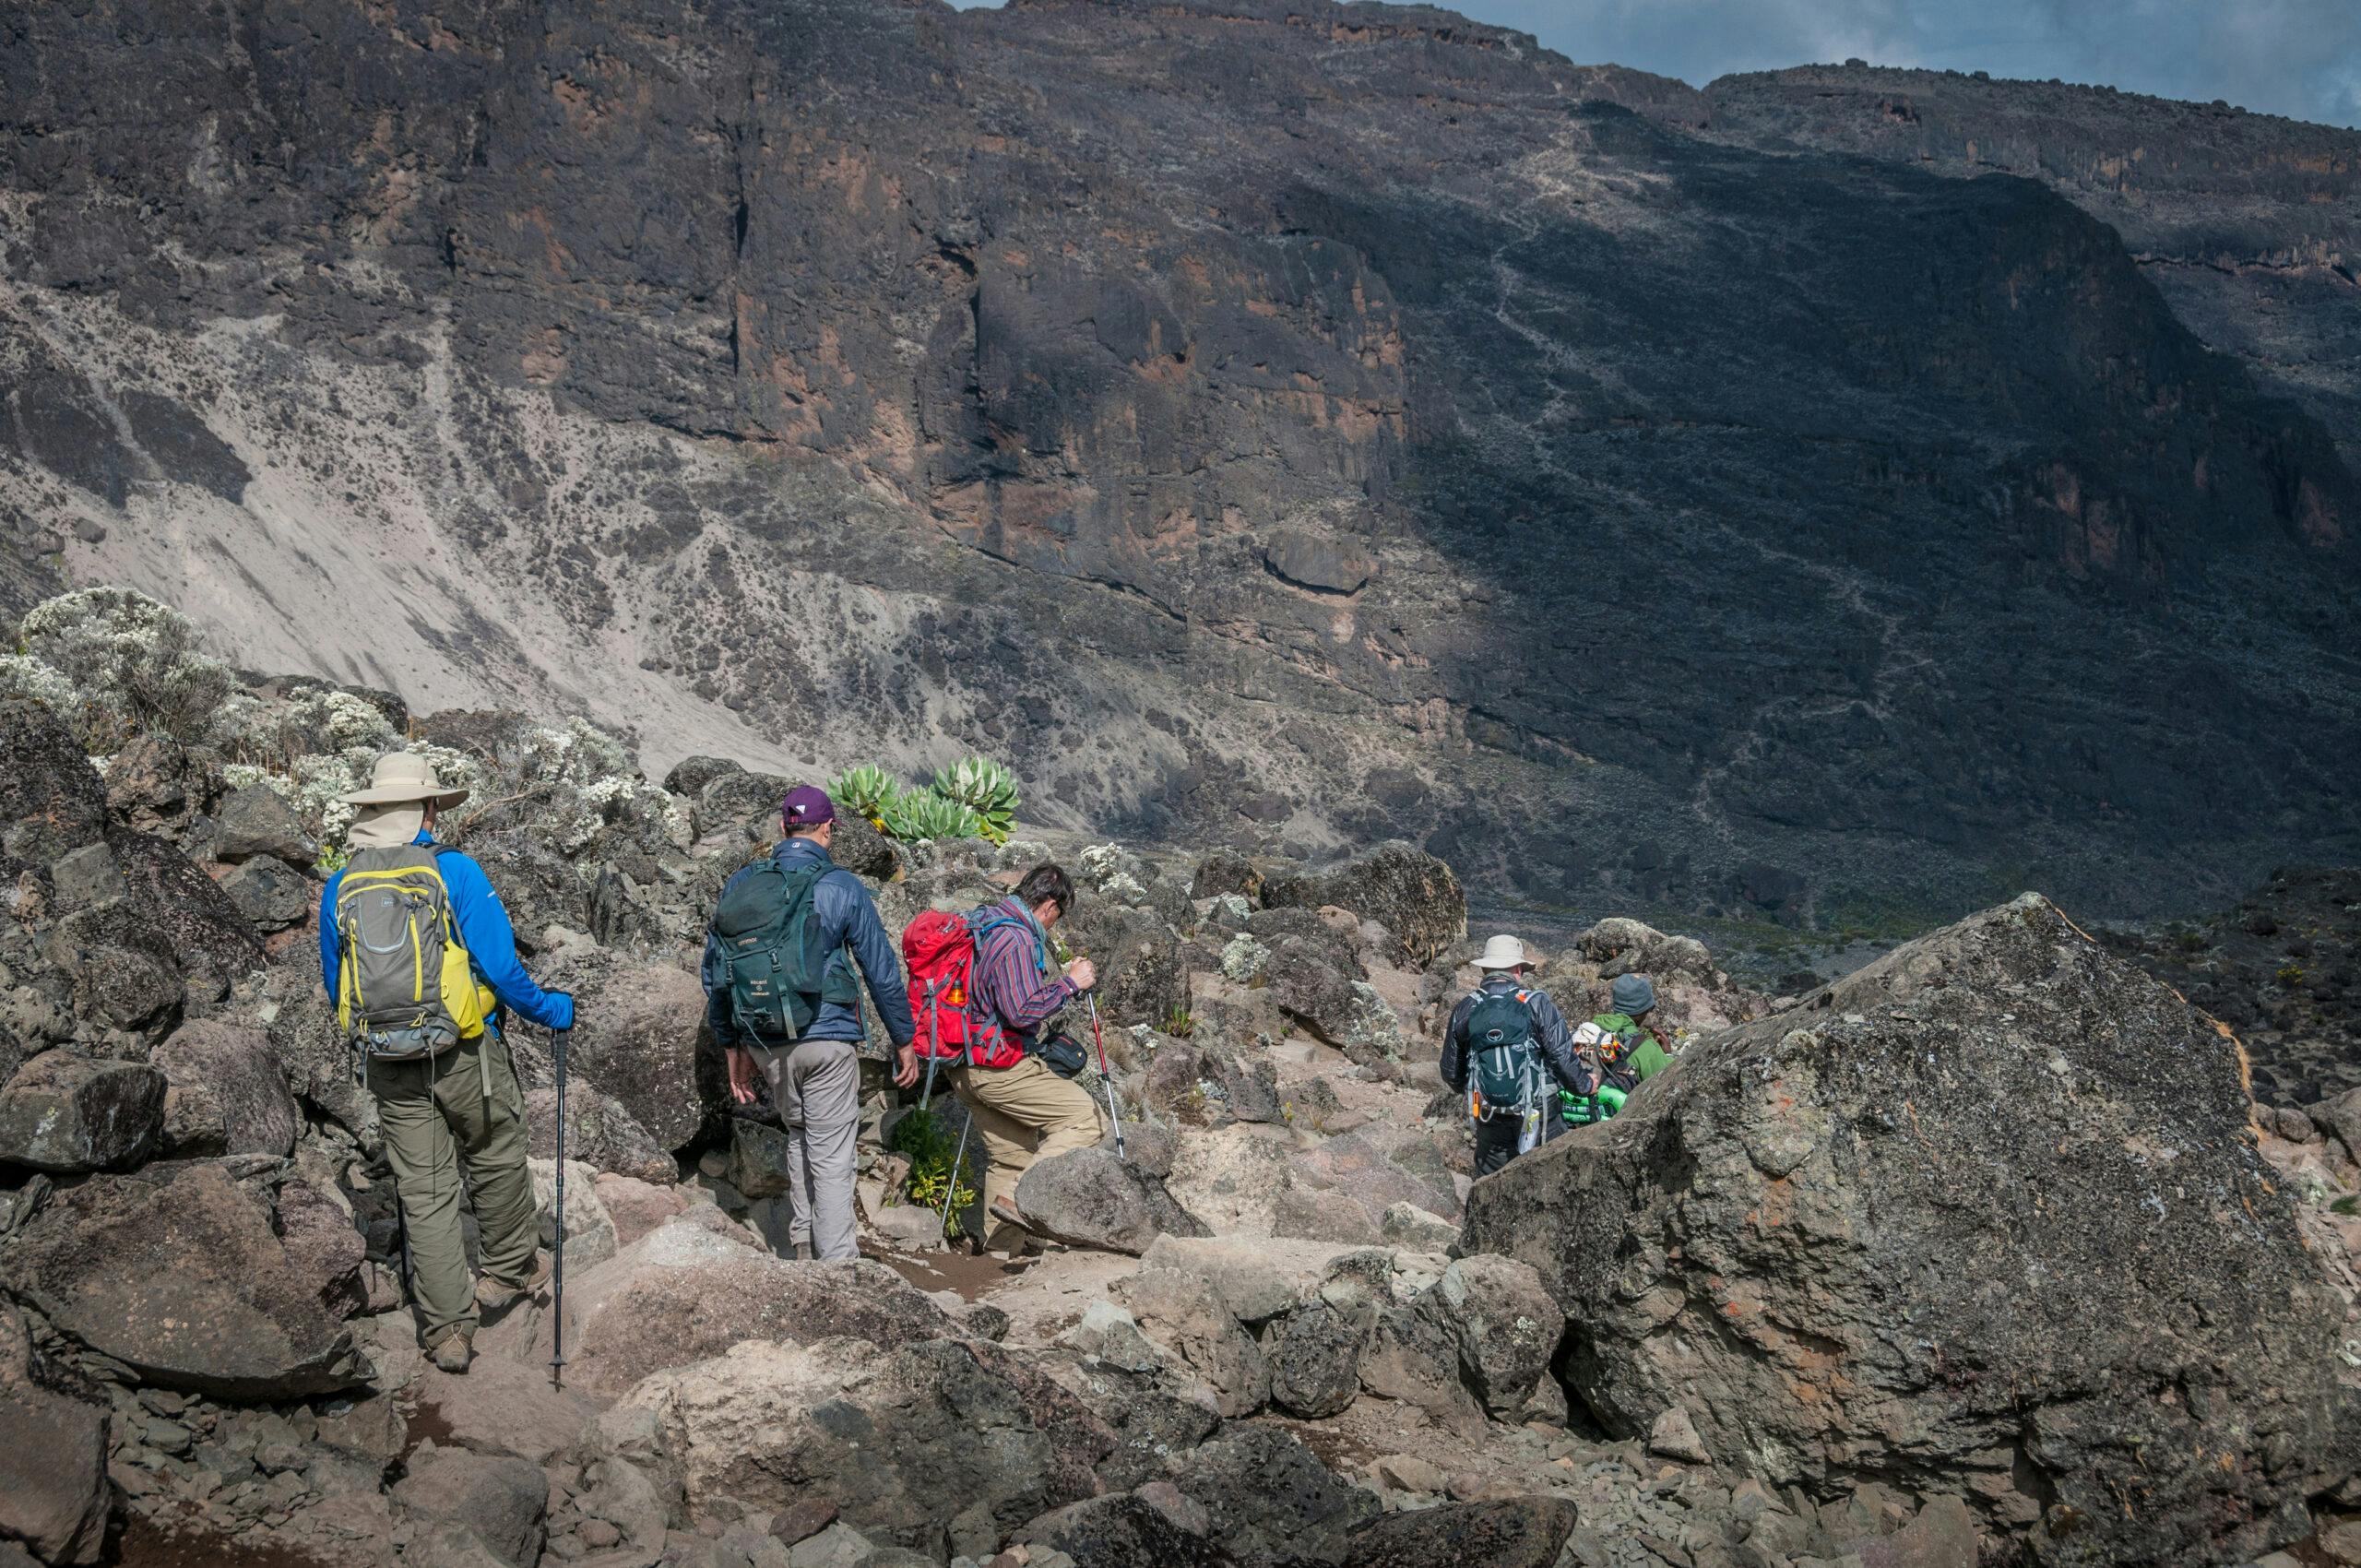 Trekkers descending on the trail to Kilimanjaro in Kilimanjaro National Park, Tanzania
